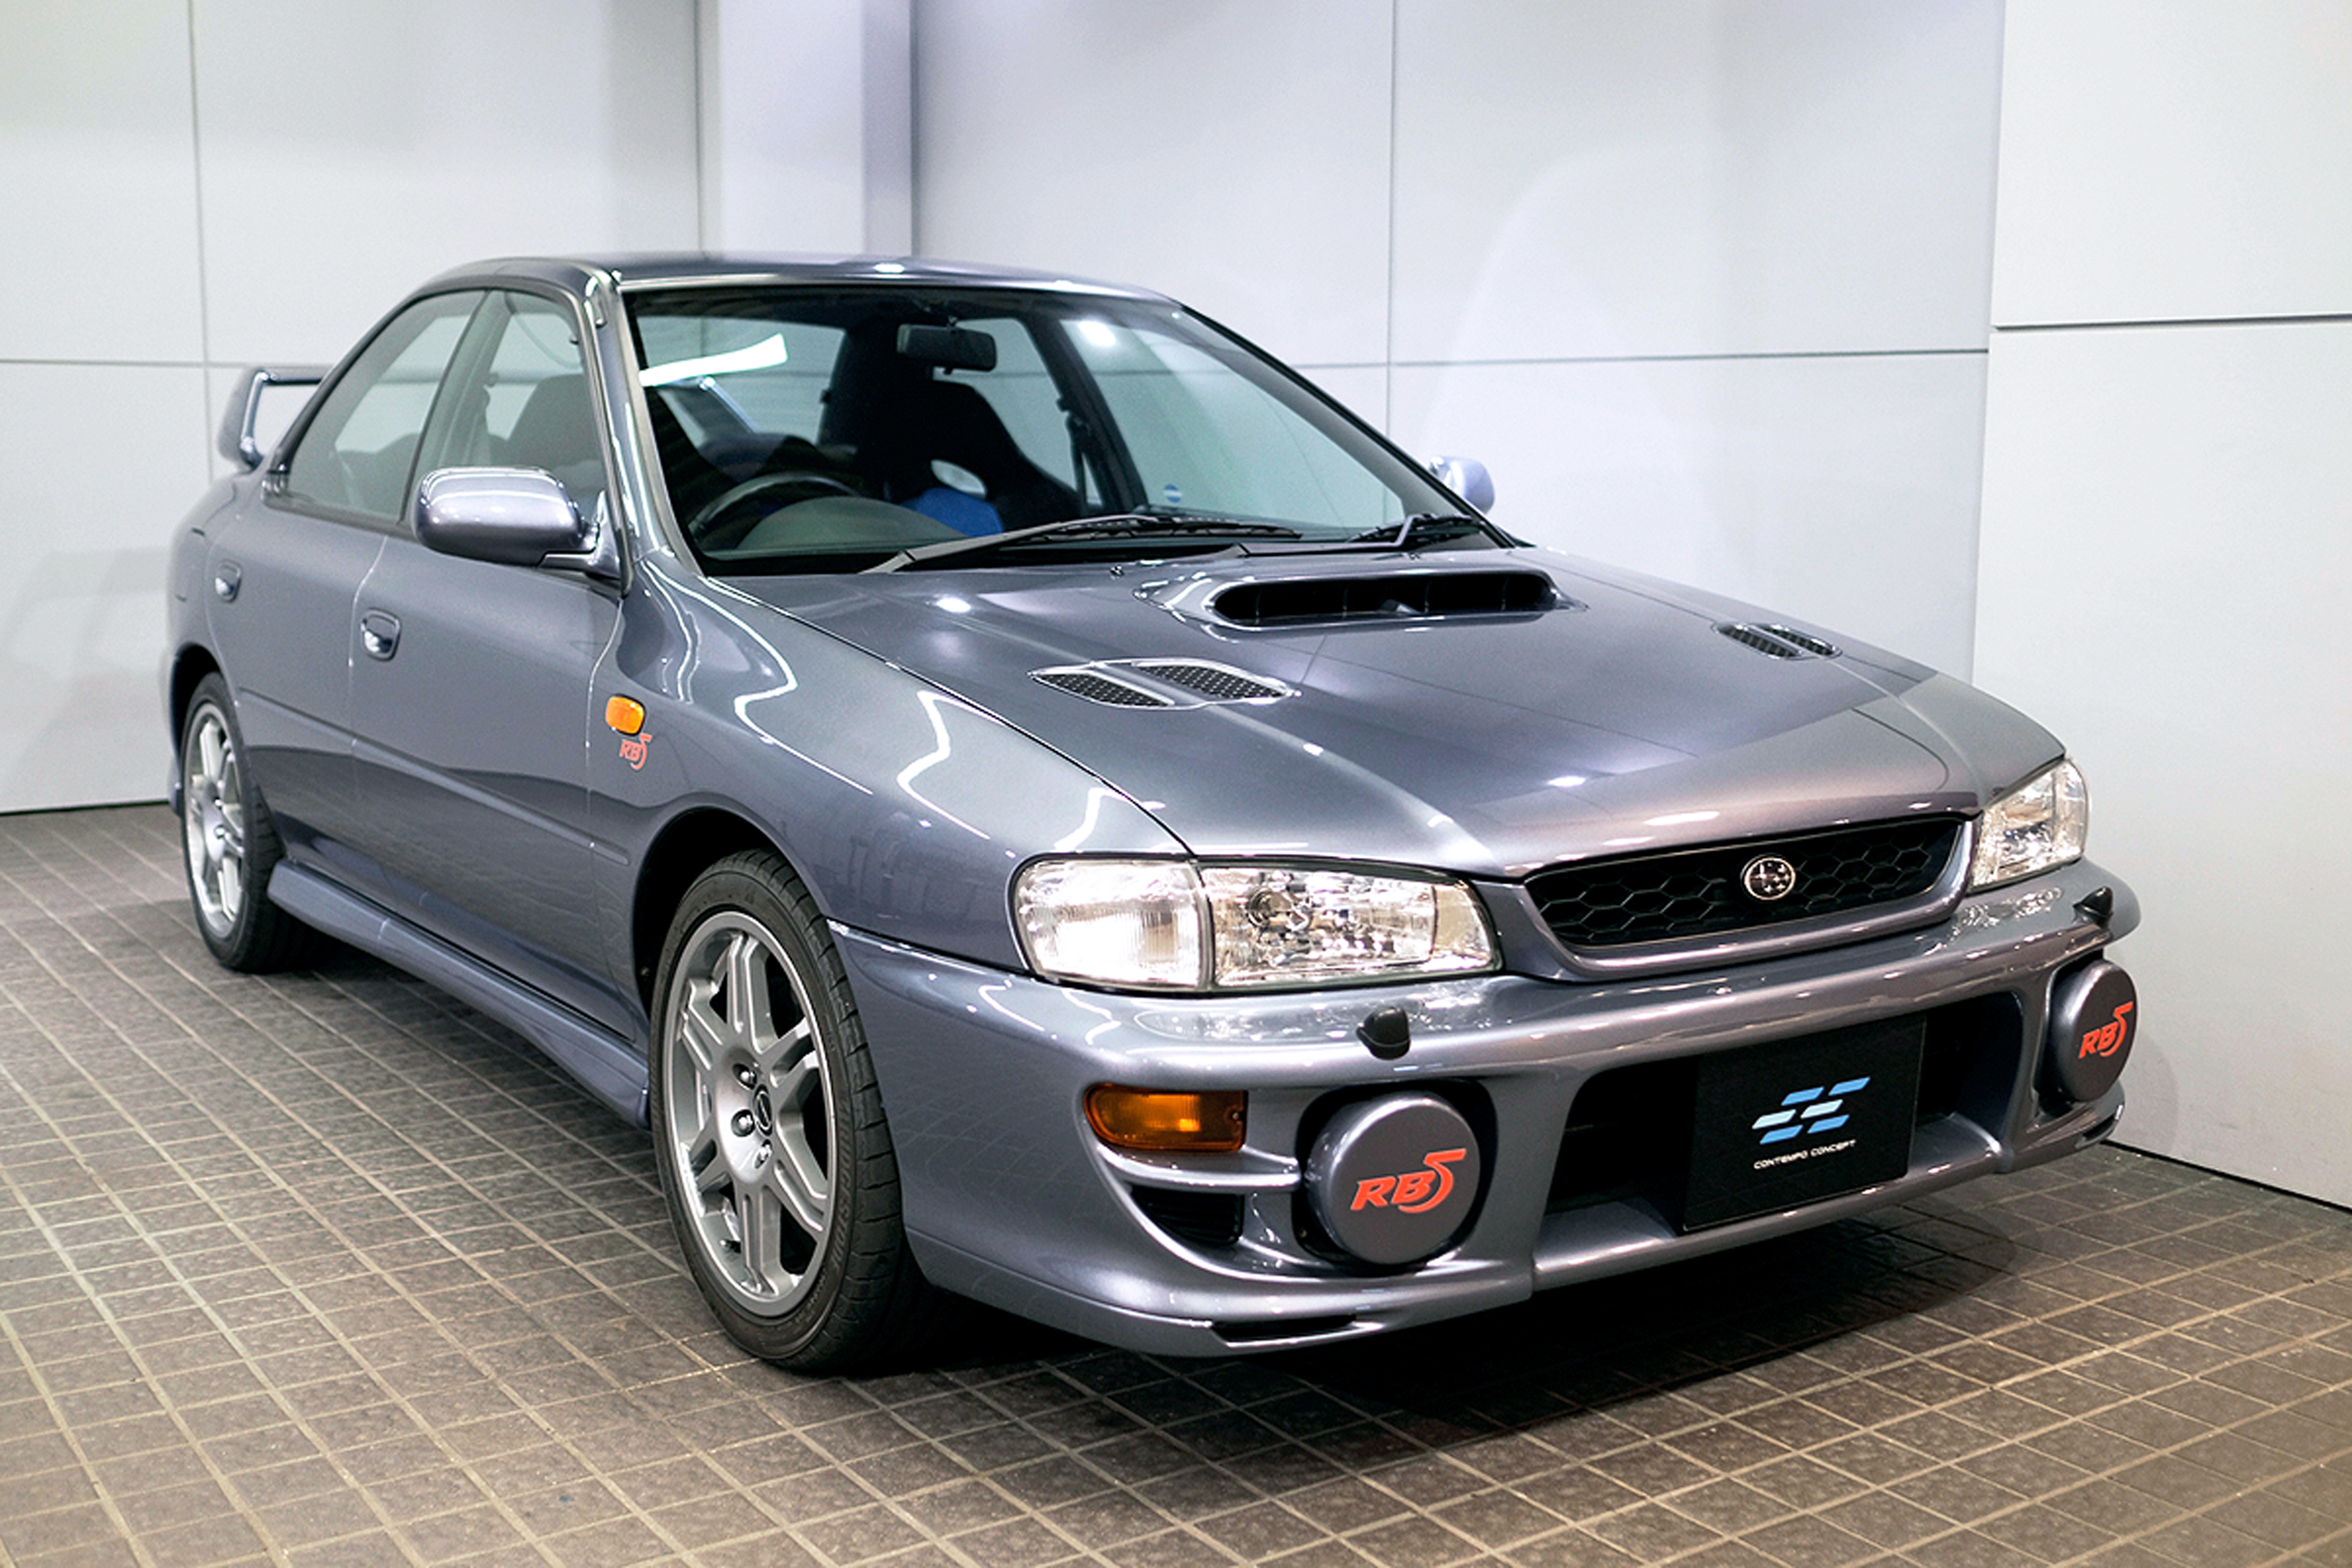 Subaru Impreza STI: 22 Jahre alter RB5 brachte fast 80.000 Euro